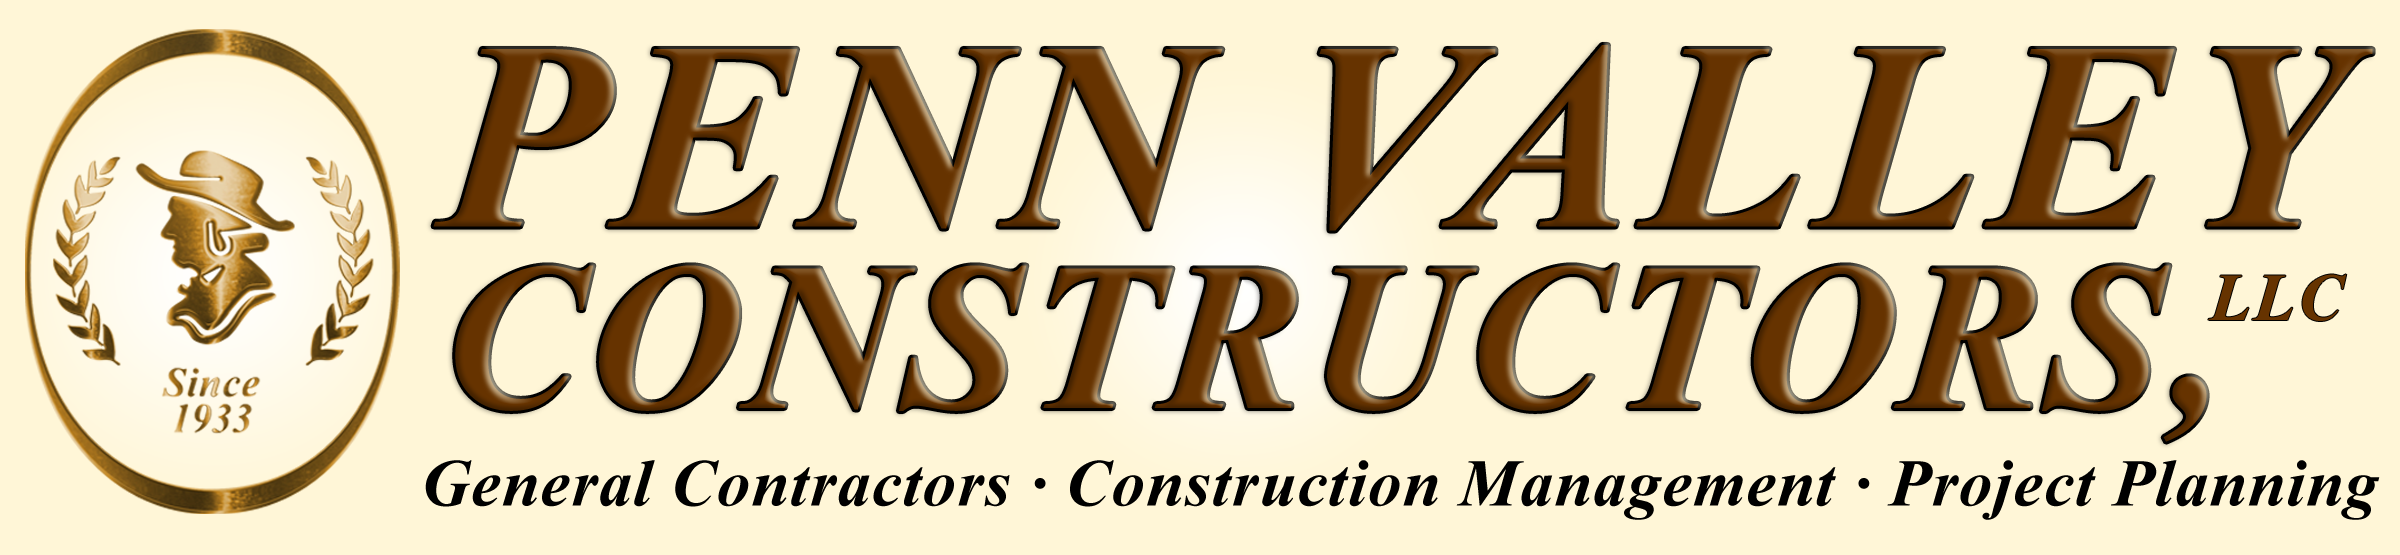 Penn Valley Constructors, Inc.